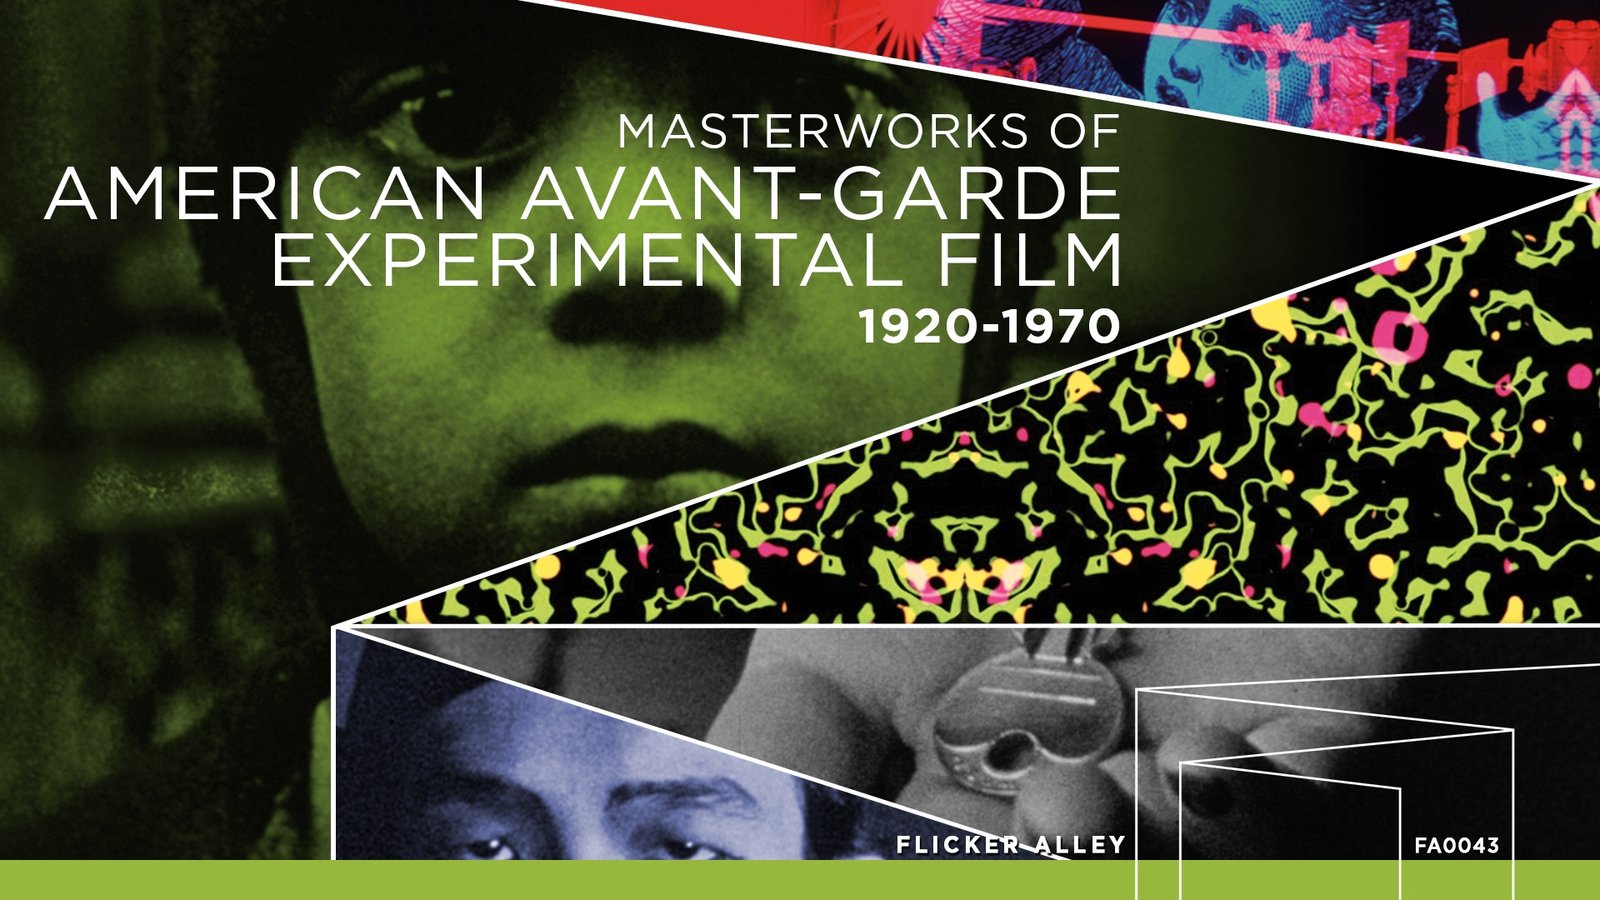 Masterworks of American Avant-garde Experimental Film 1920-1970